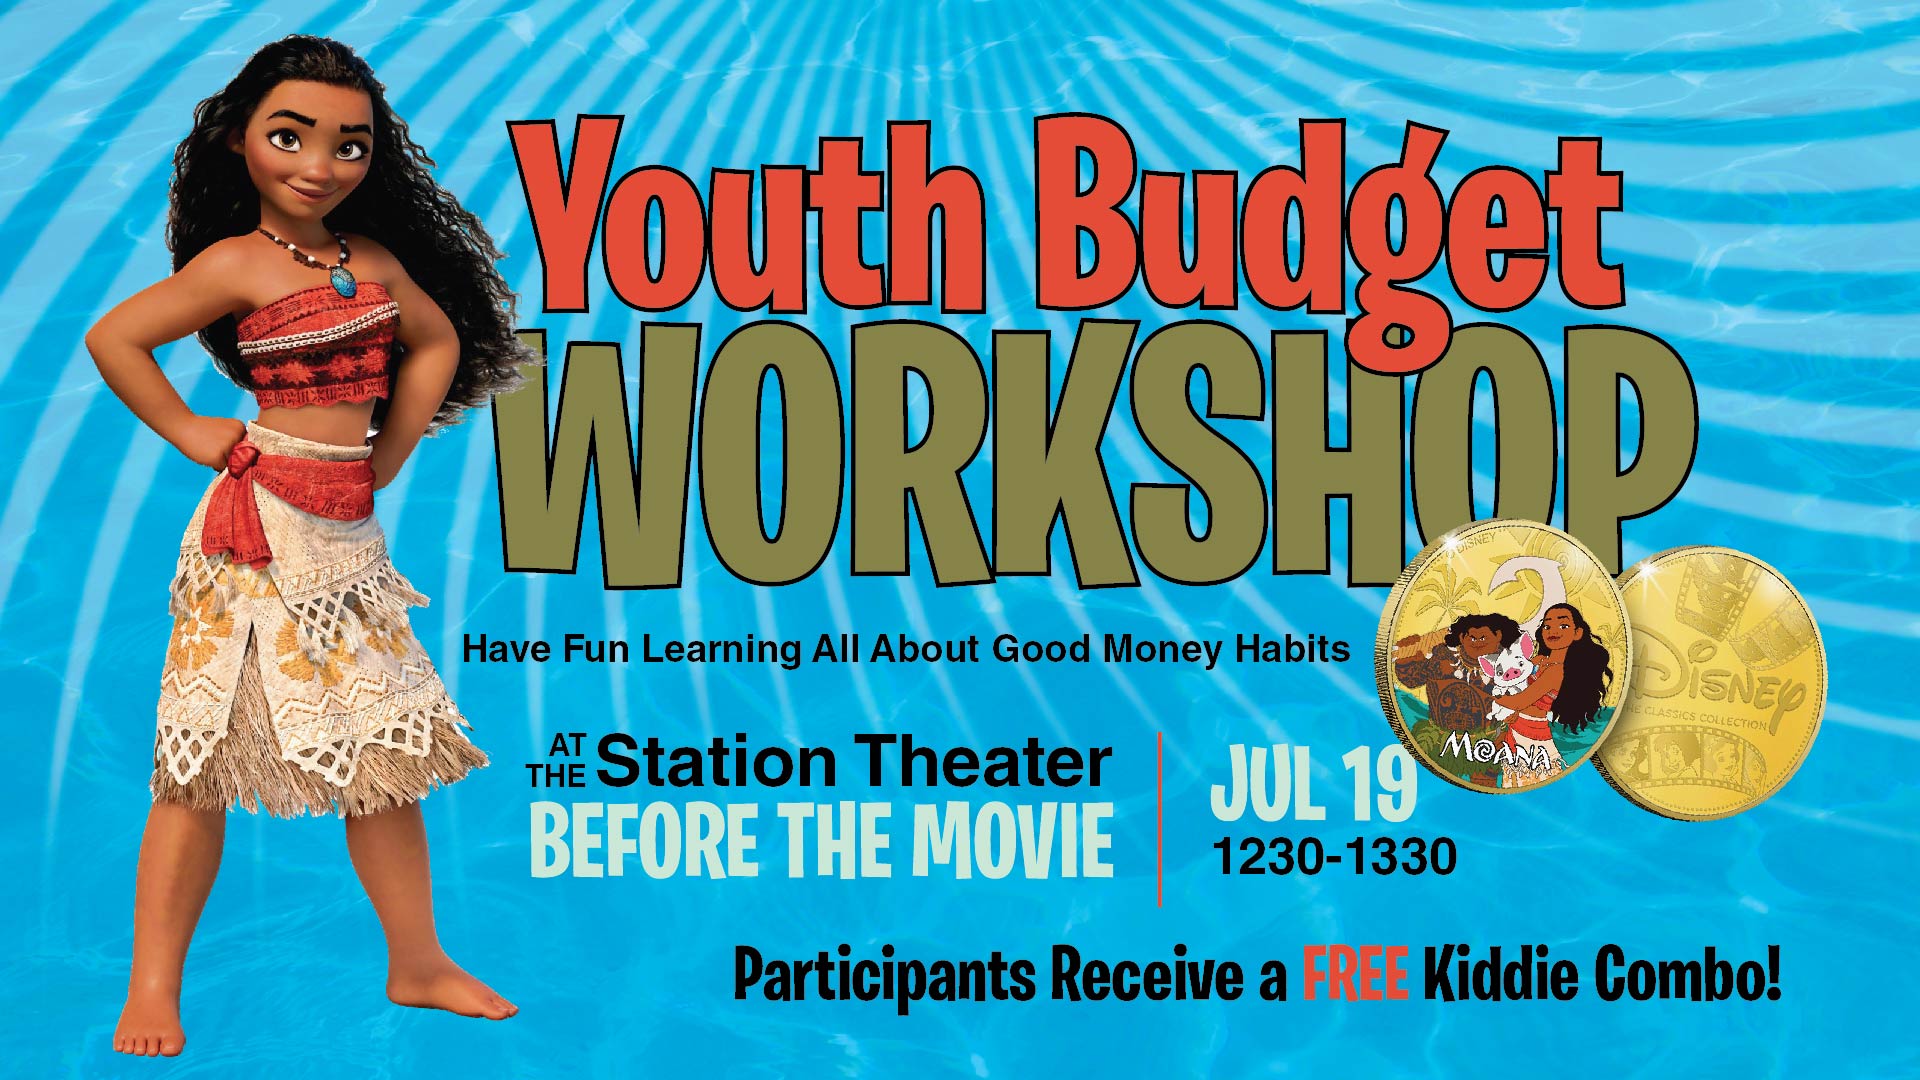 Youth Budget Workshop & Movie